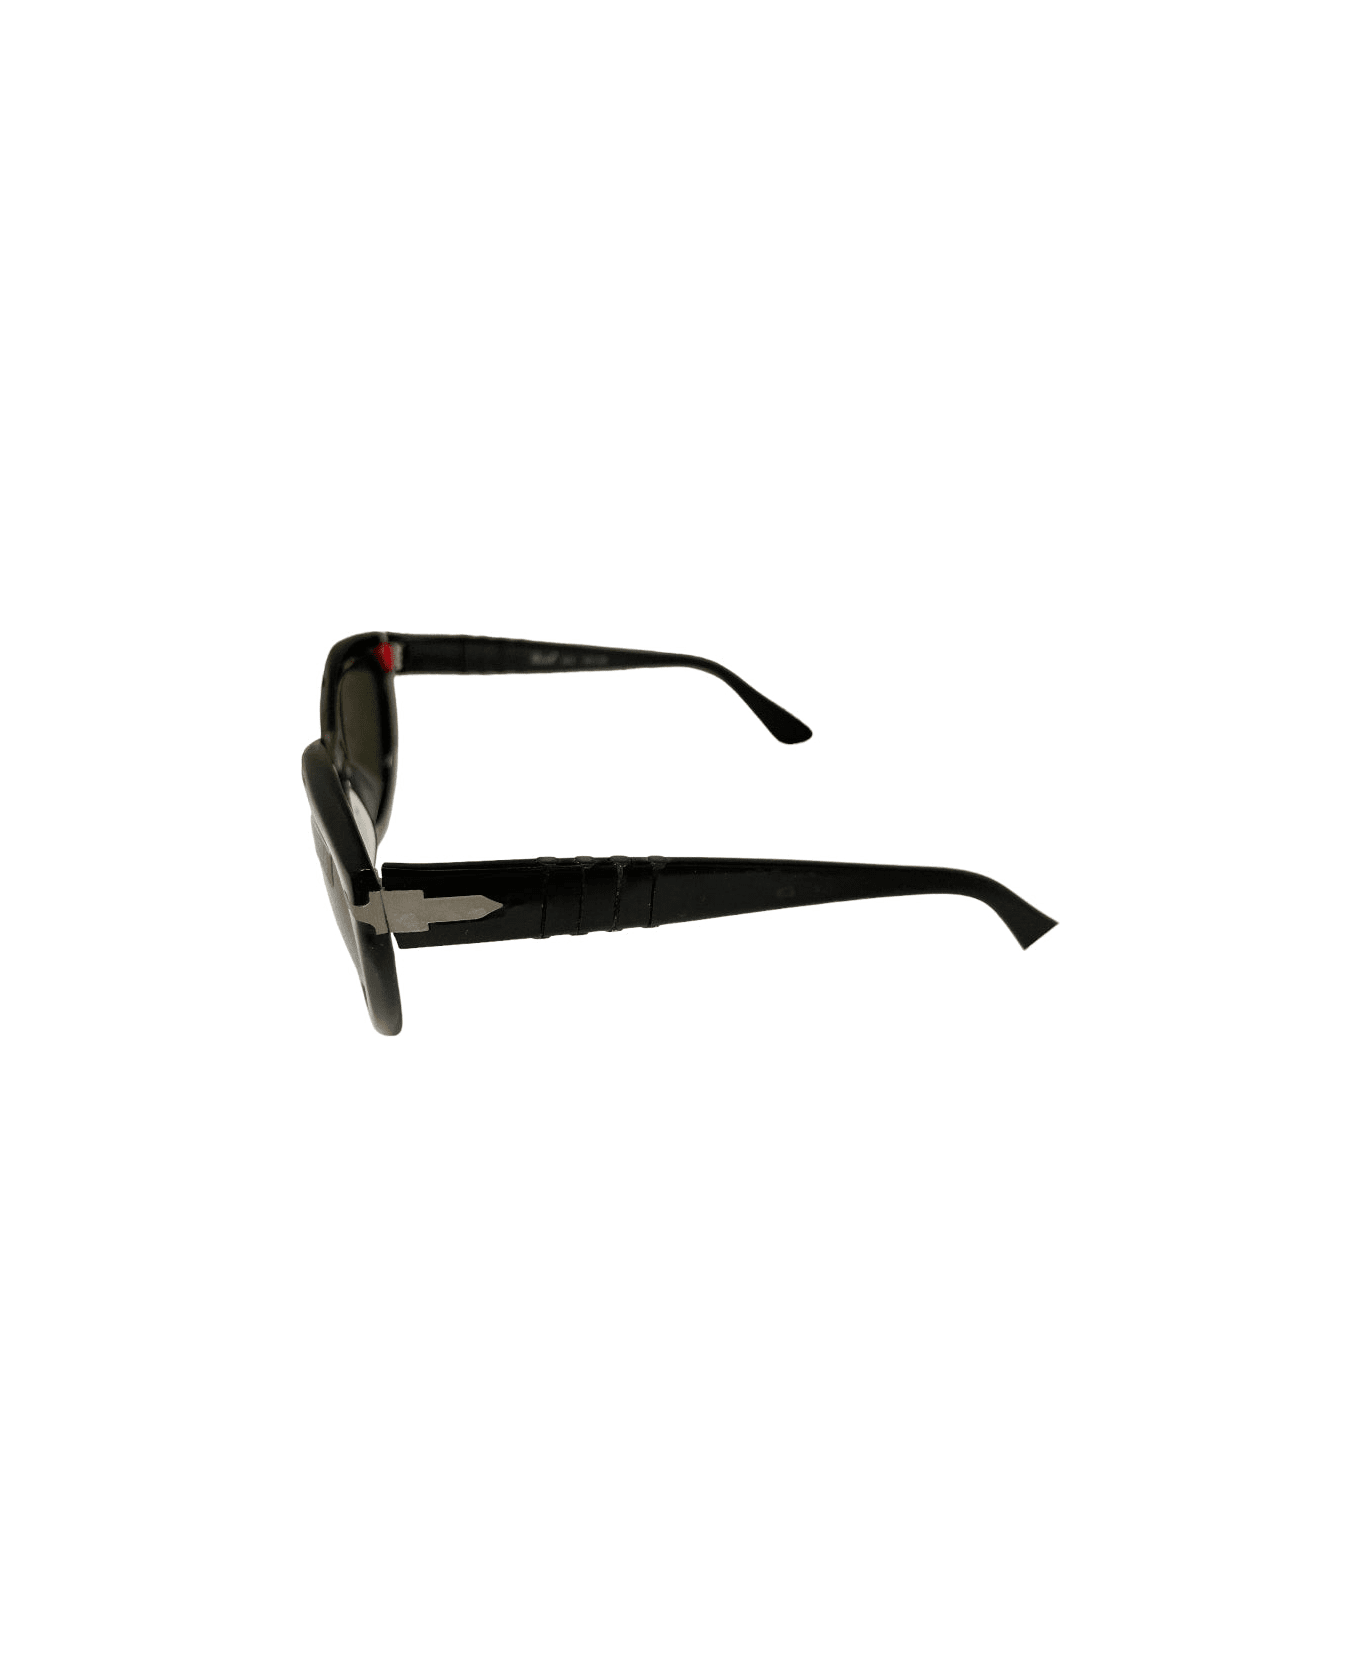 Persol 843 - Black Sunglasses サングラス